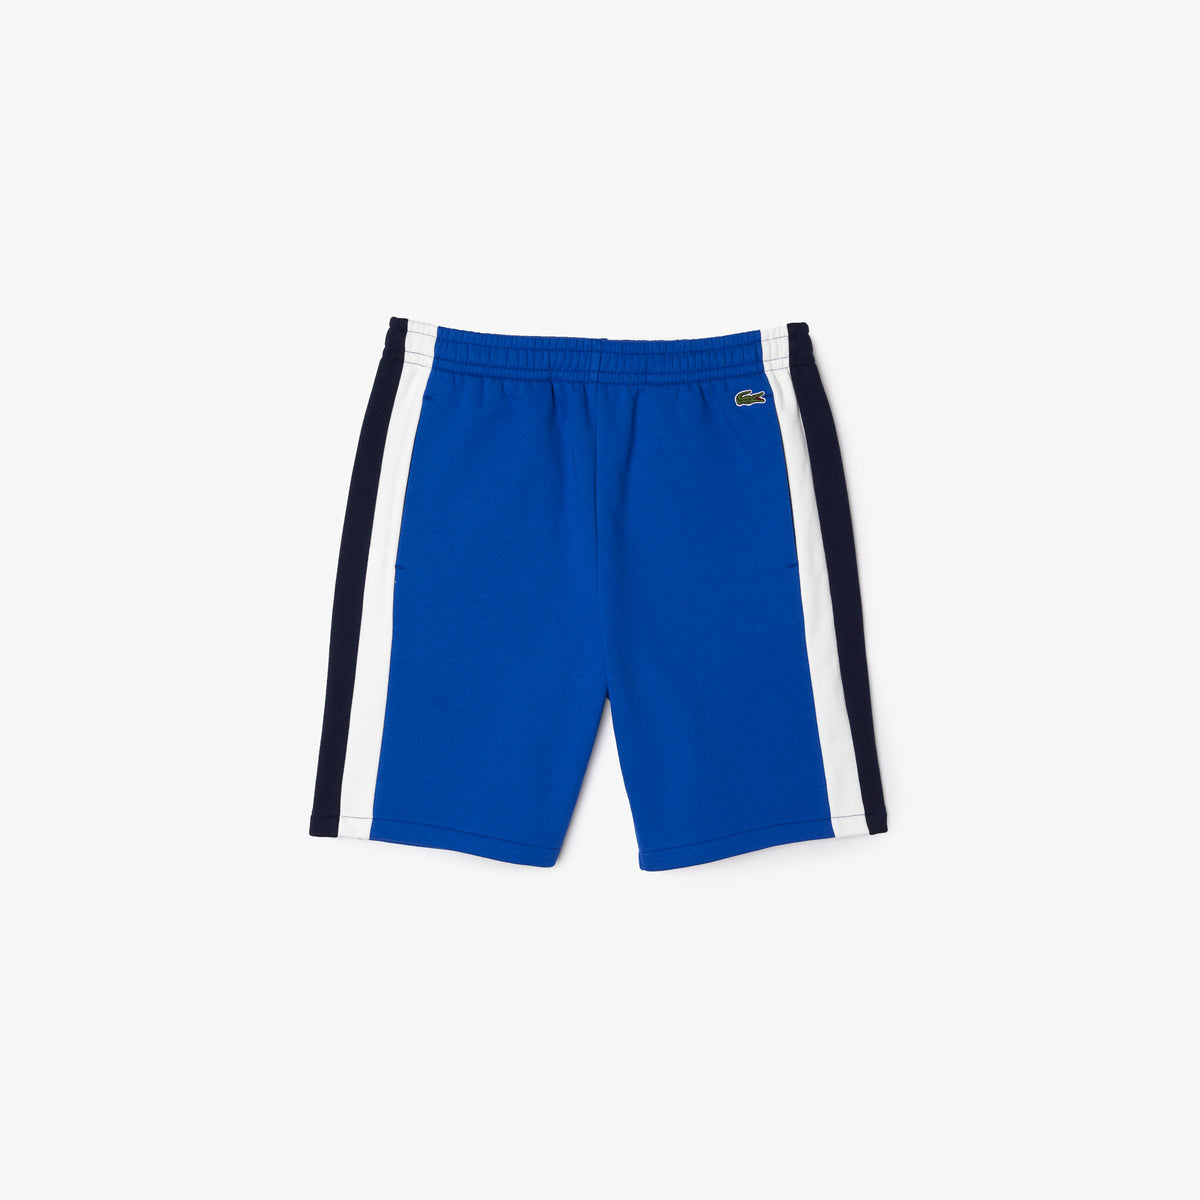 Lacoste - Brushed Fleece Colorblock Shorts - Blue/Navy Blue